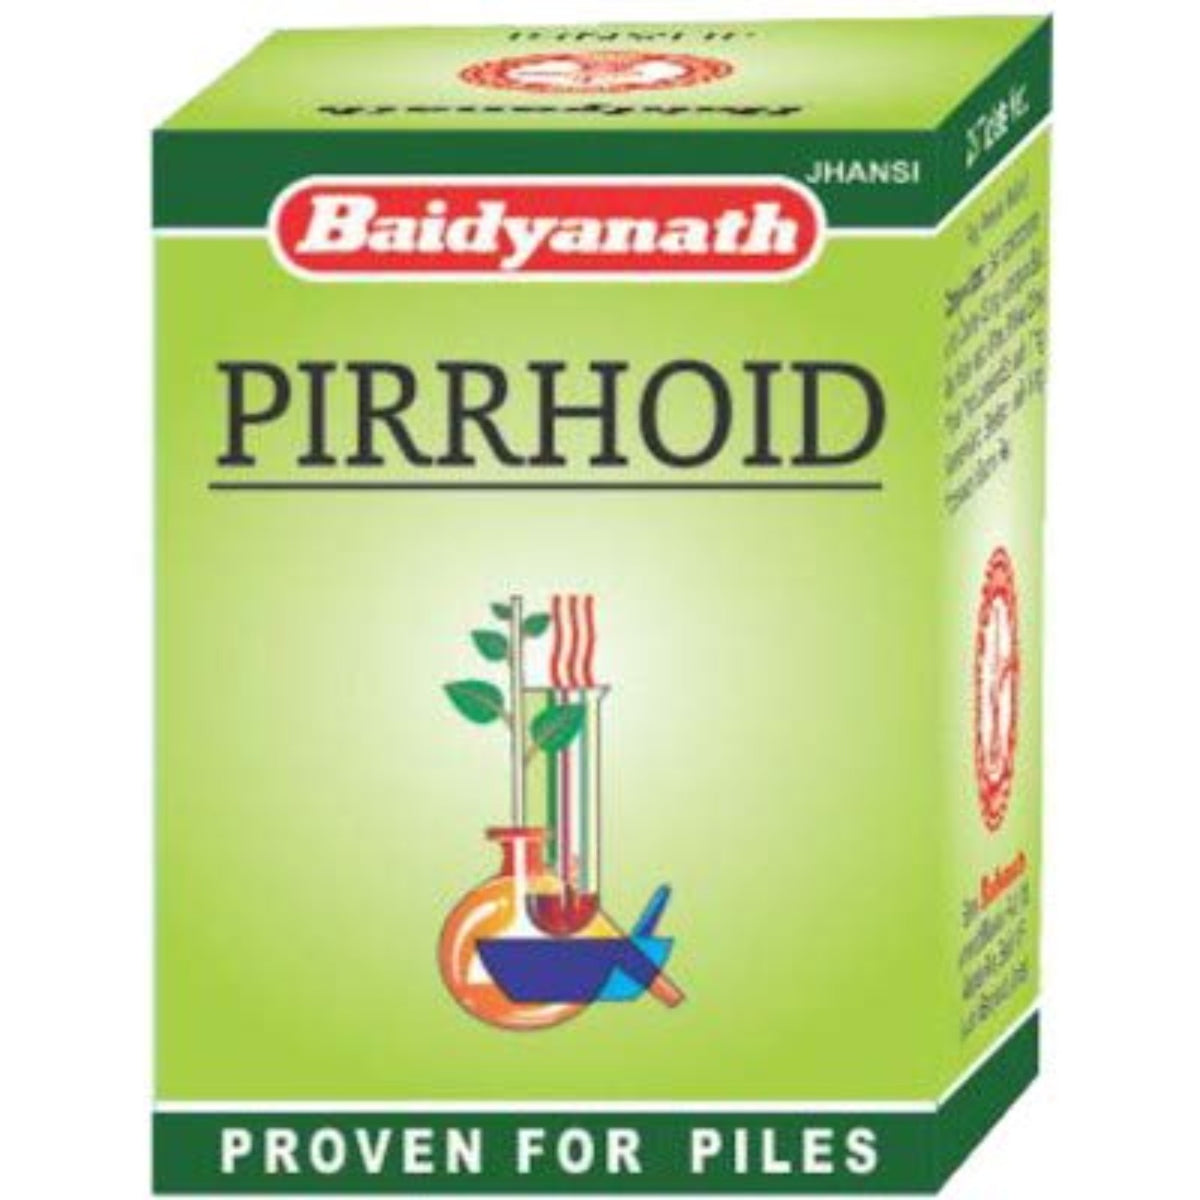 Baidyanath Ayurvedic (Jhansi) Pirrhoid Tablets